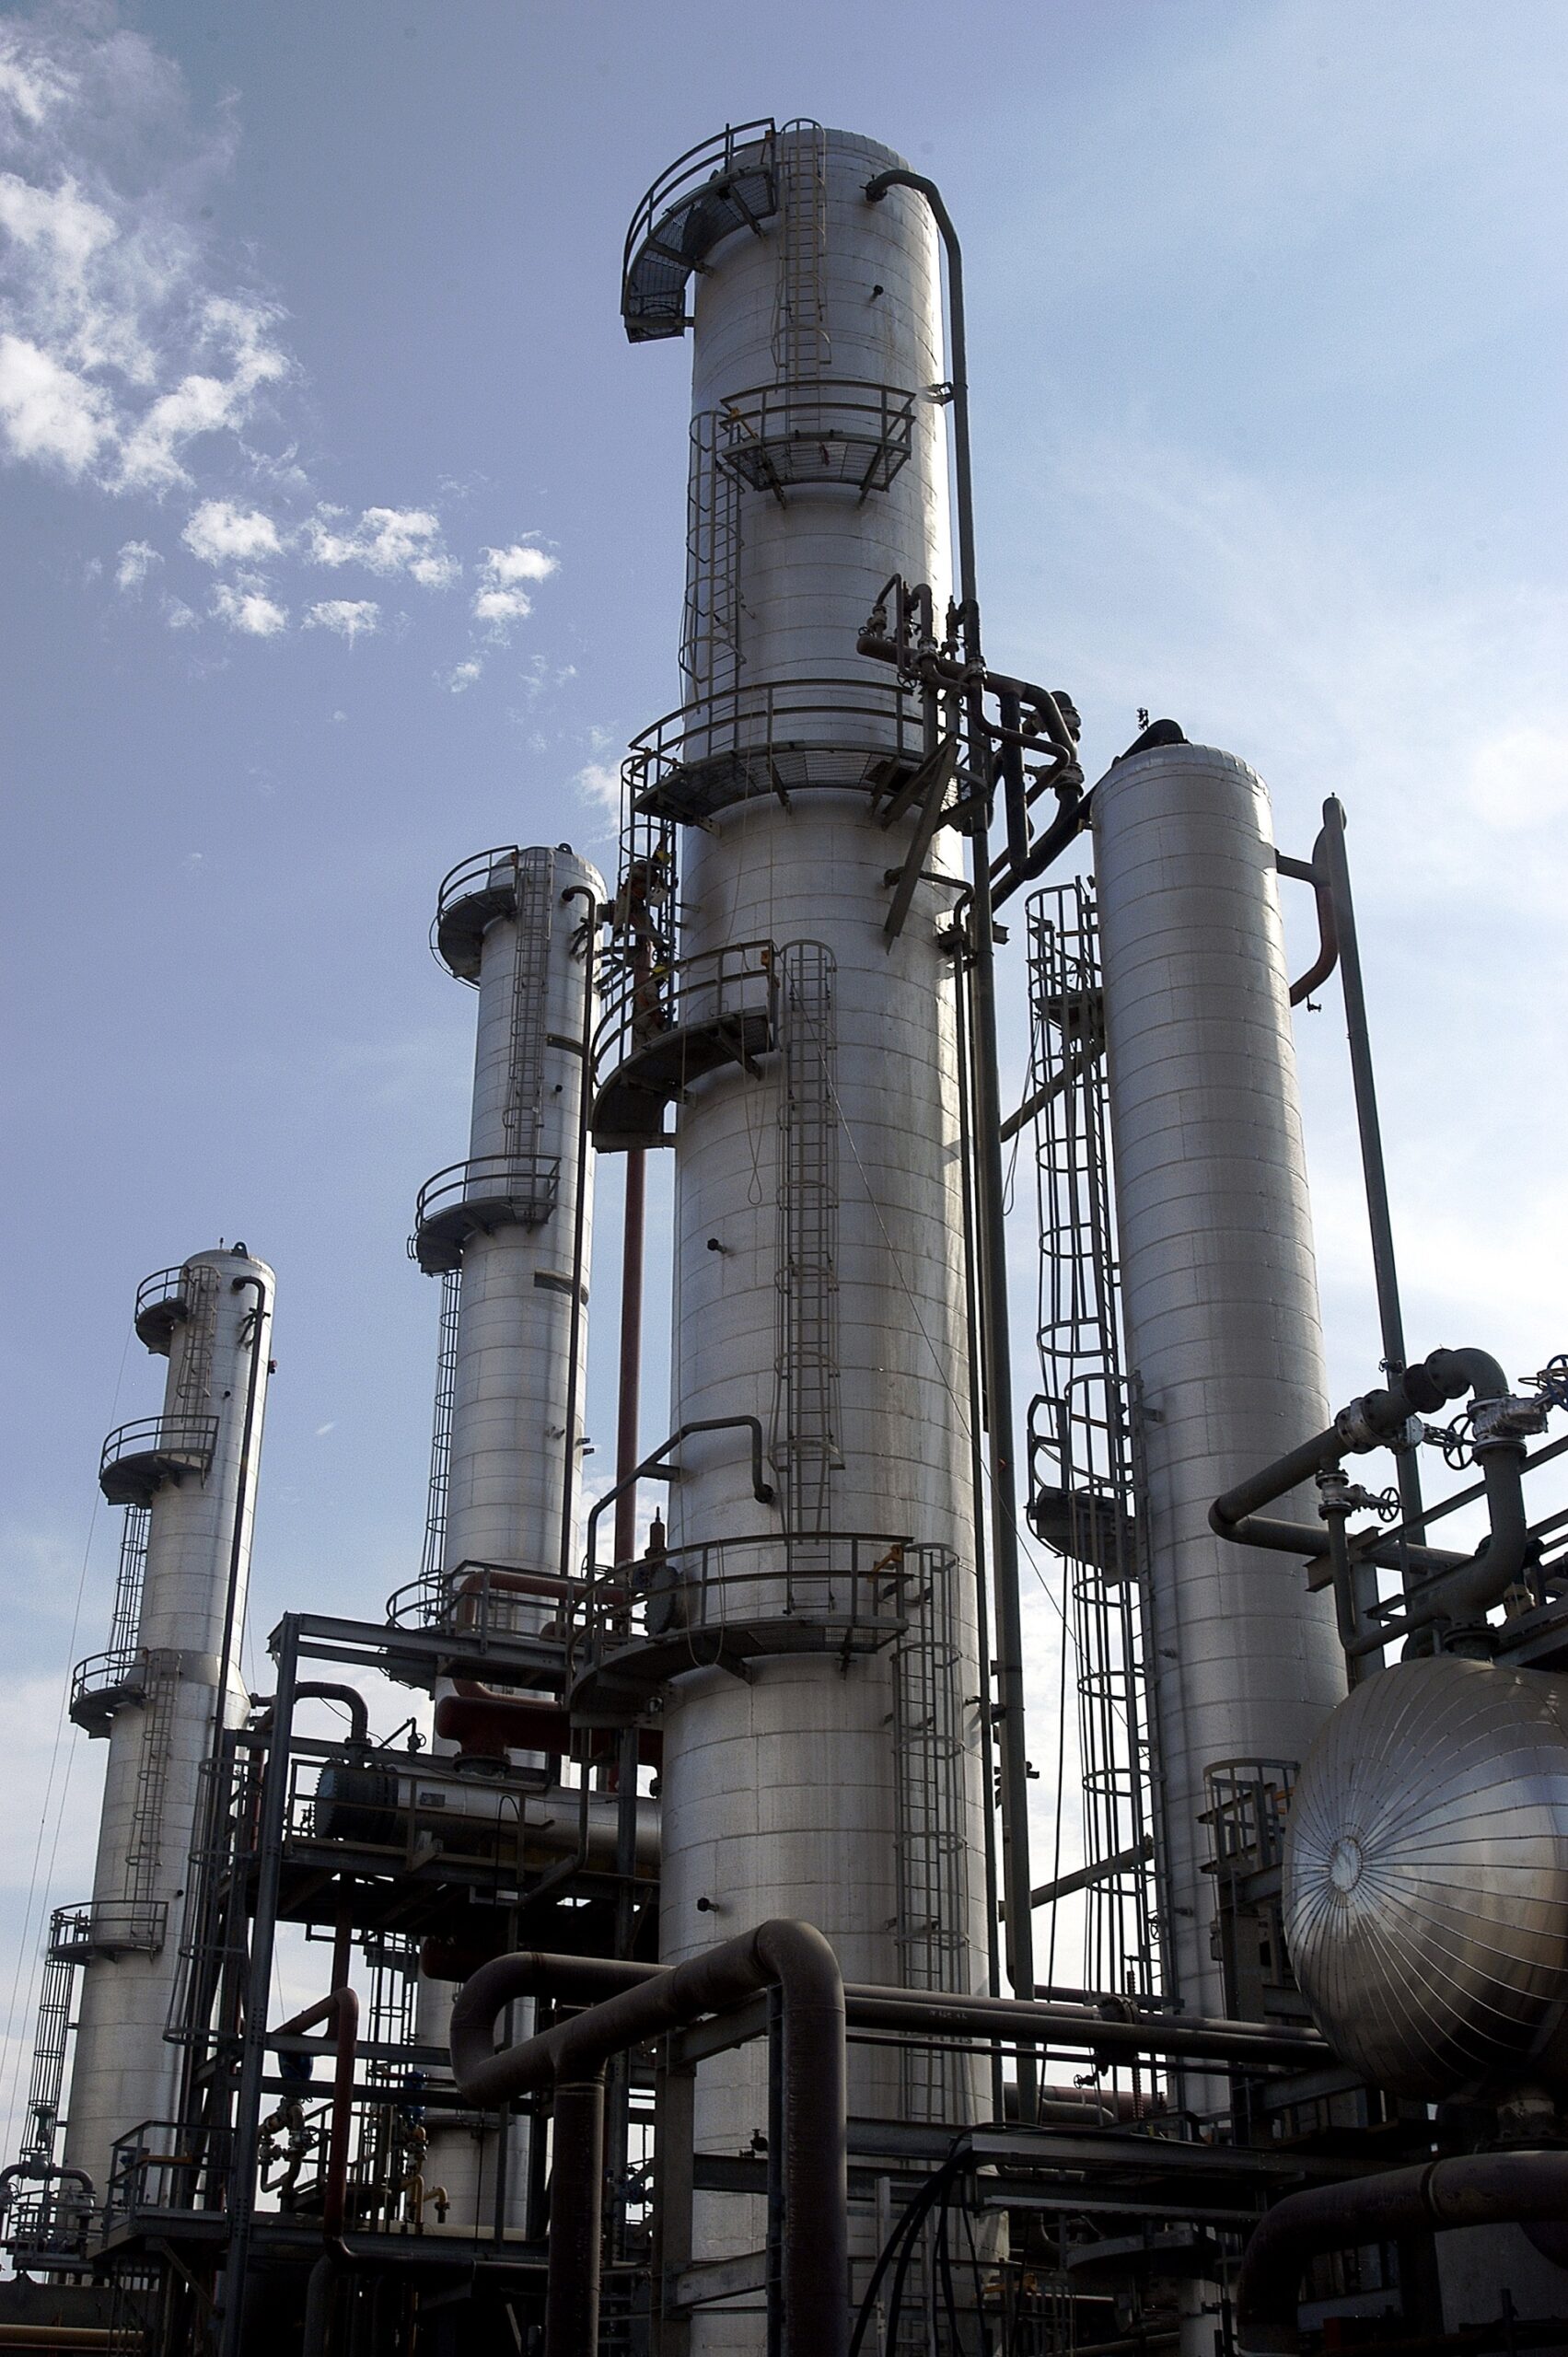 Morelco: EPC Expansión de Fraccionamiento de gas Natural en Pisco para Camisea - Consorcio PPC en Lima, Perú